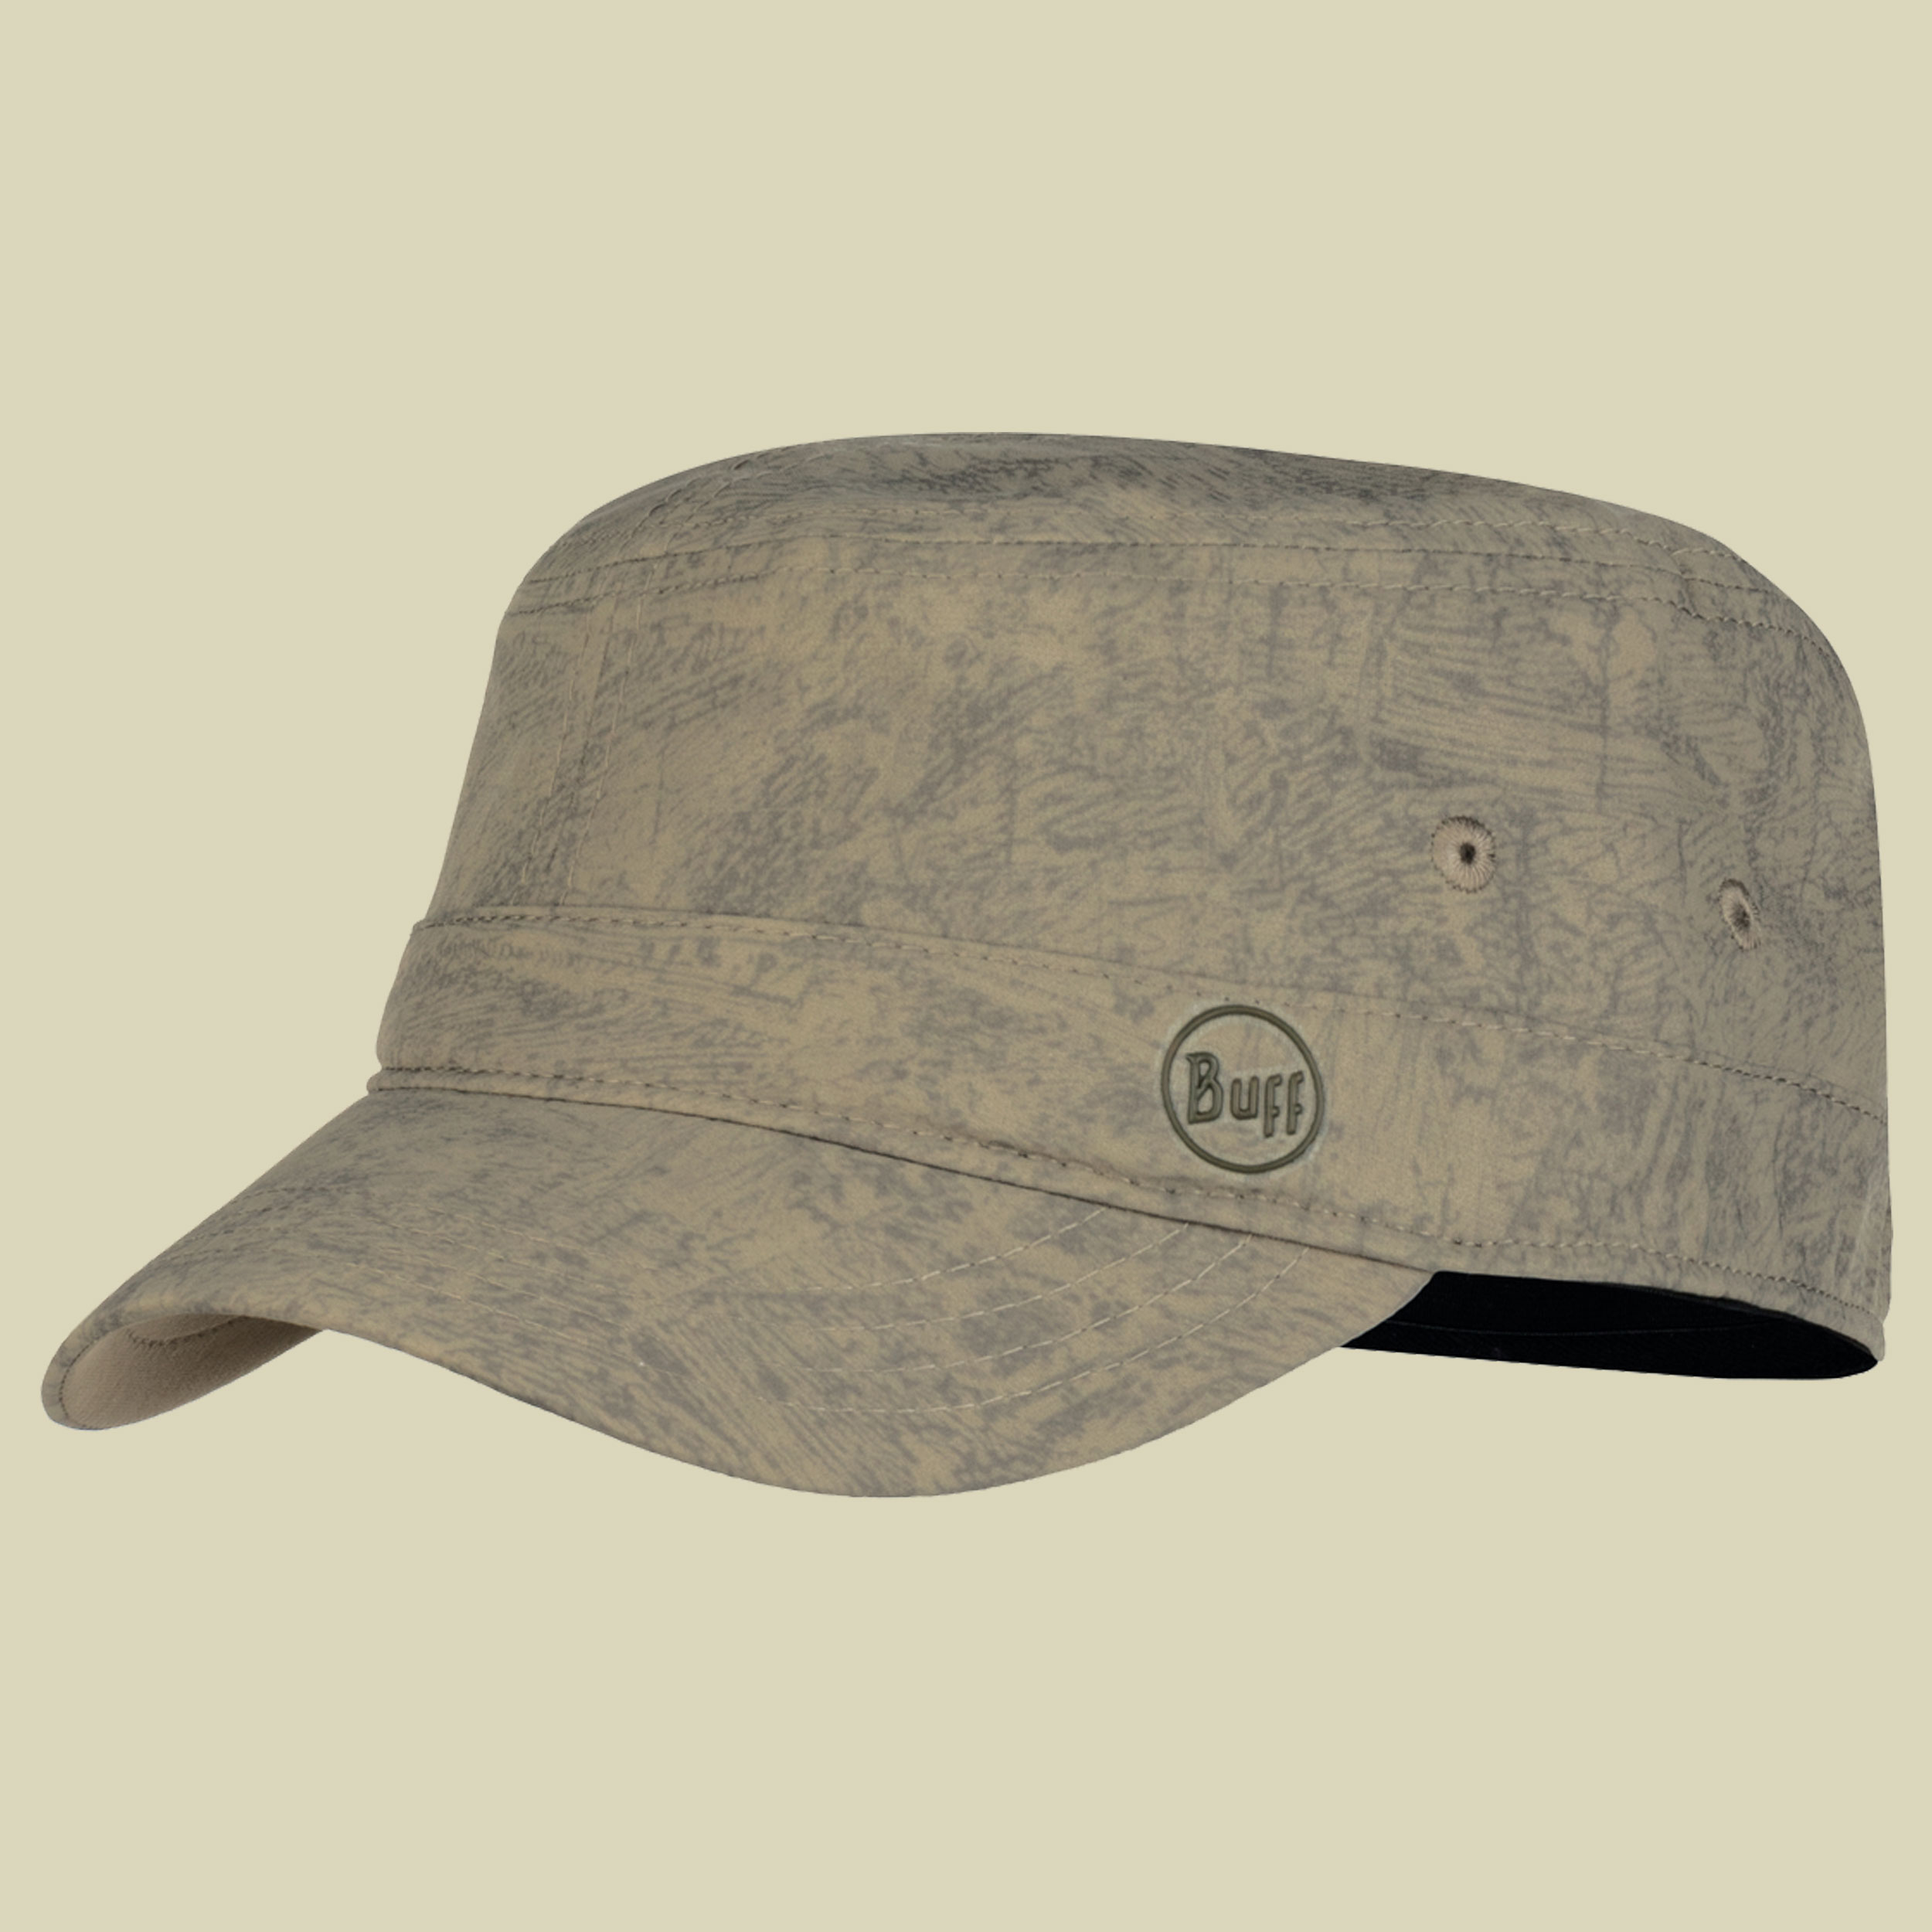 Military Cap Größe M/L  Farbe zinc taupe brown